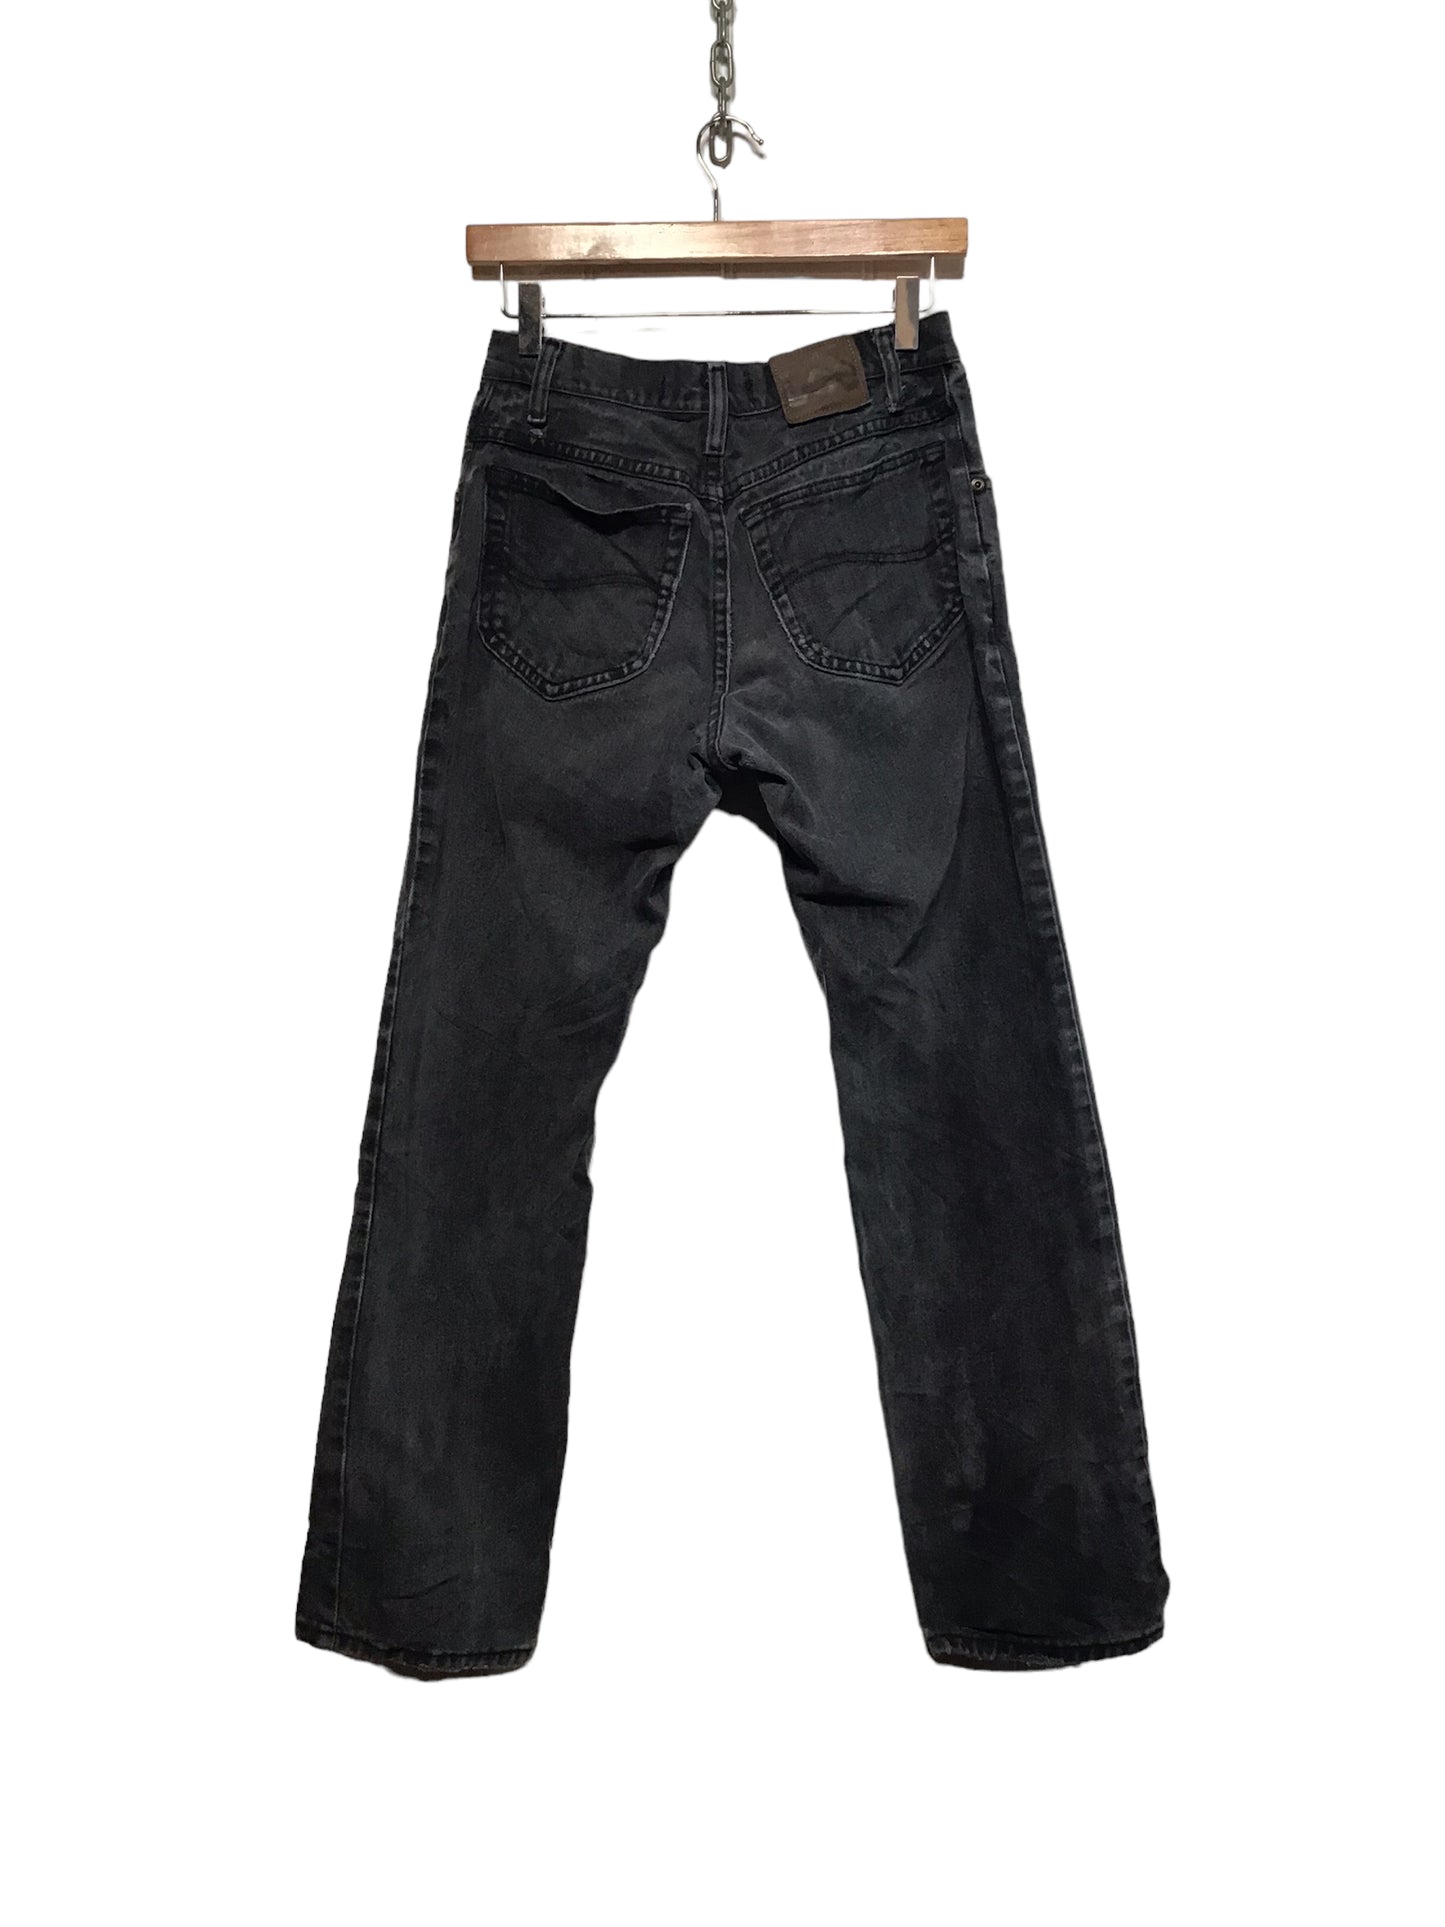 Lee Grey Jeans (30x30)